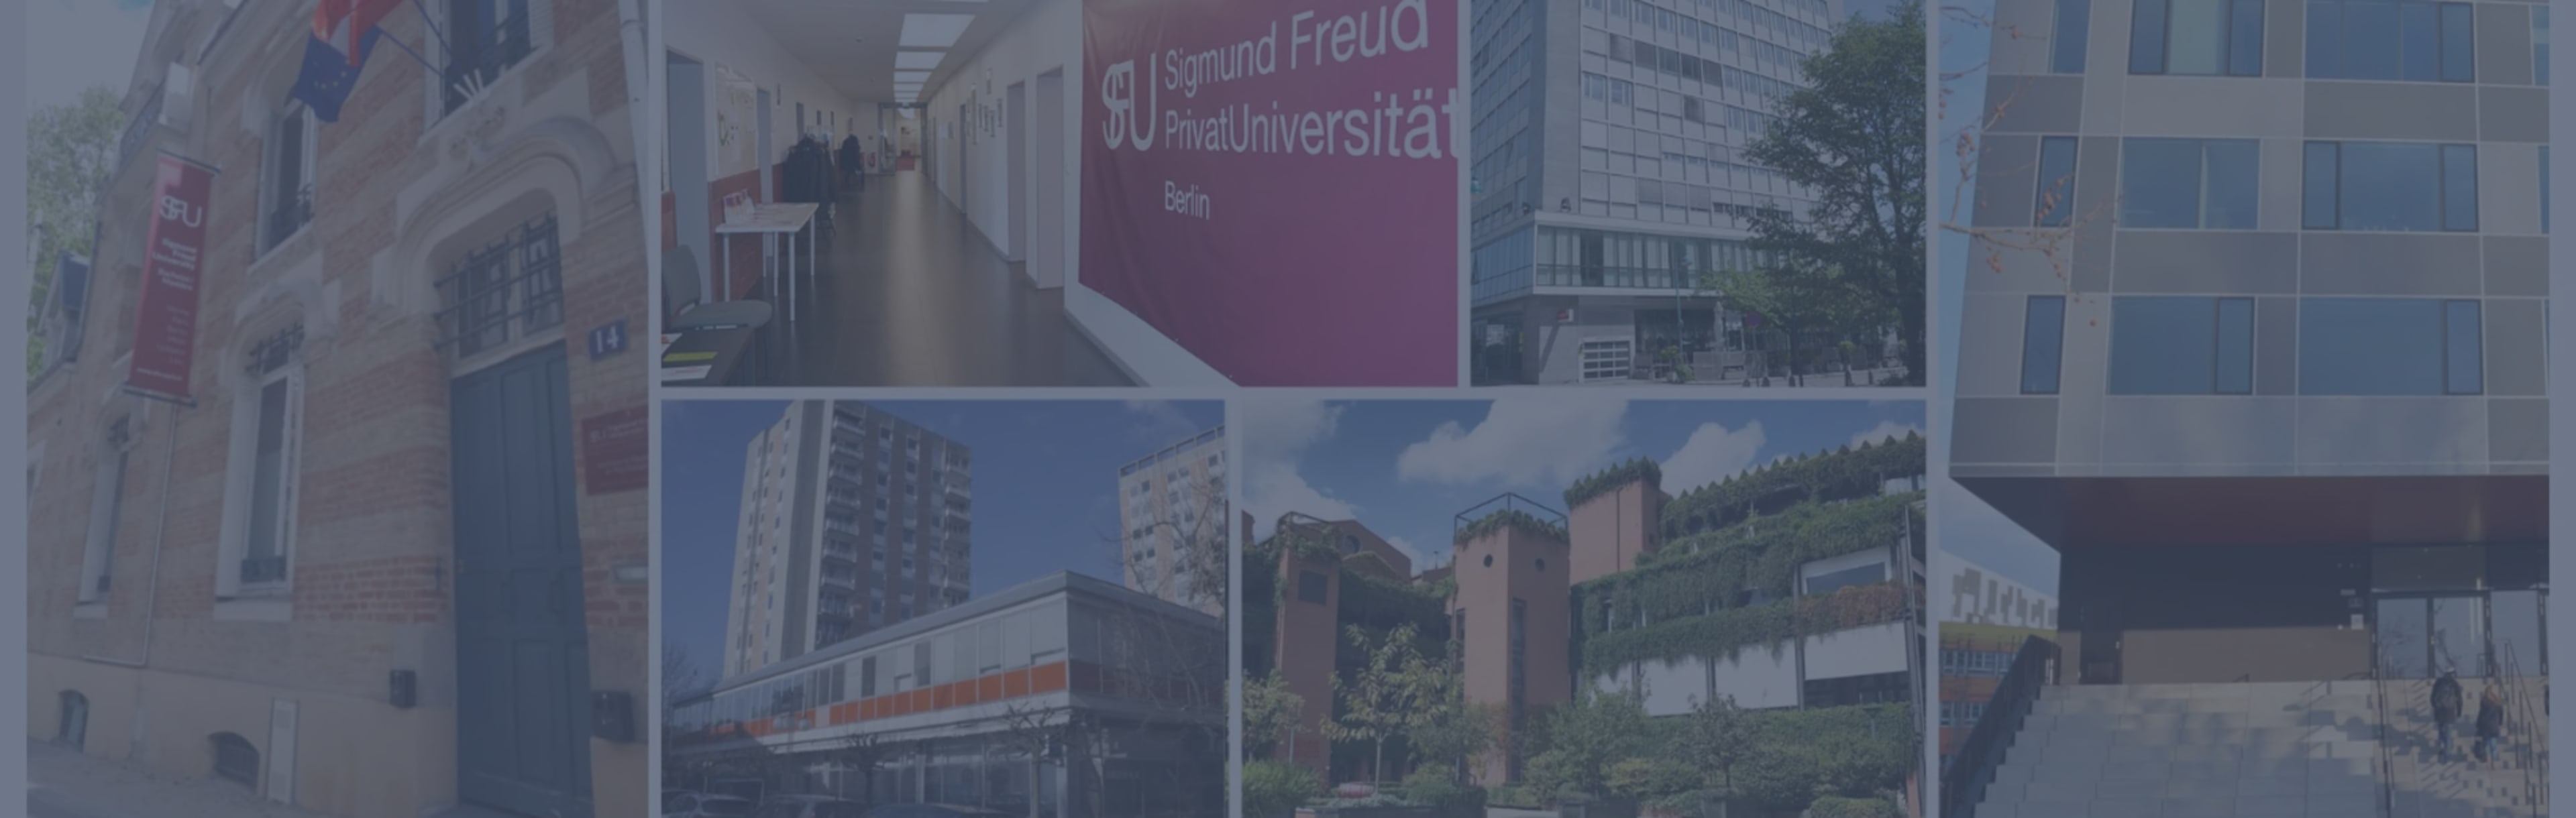 Sigmund Freud University Paris